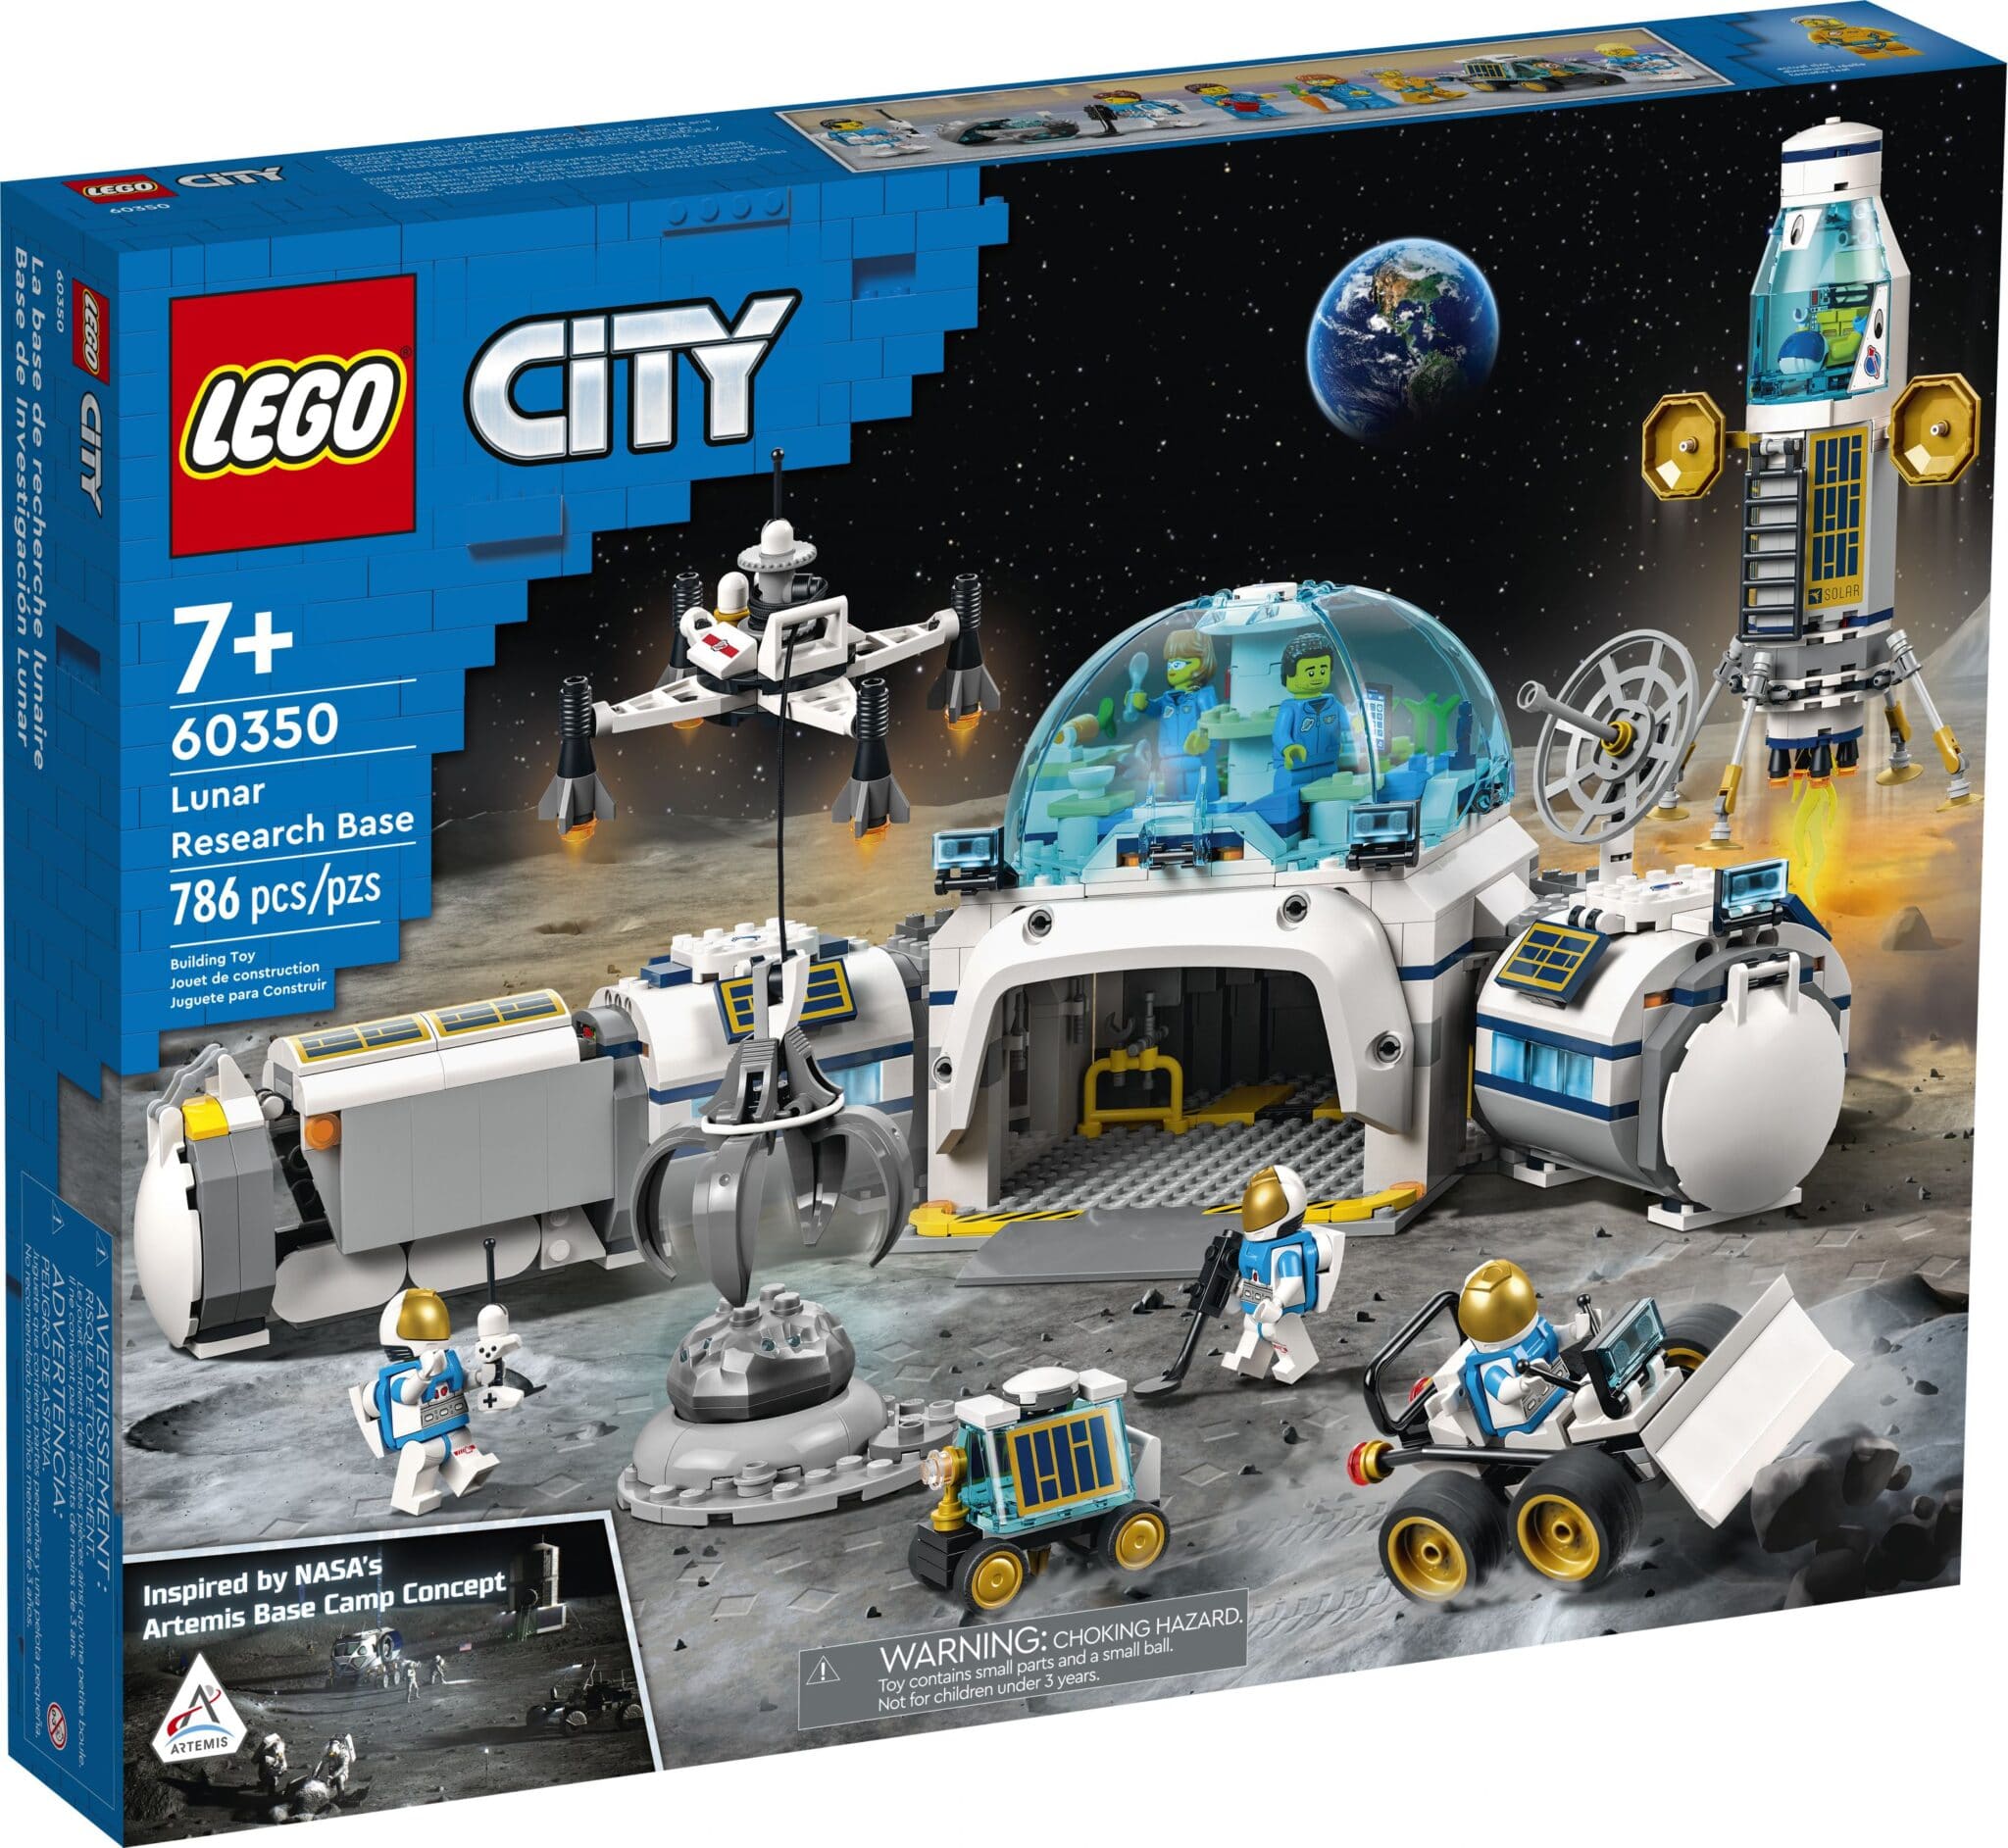 LEGO City 2022 Sets Revealed The Brick Fan